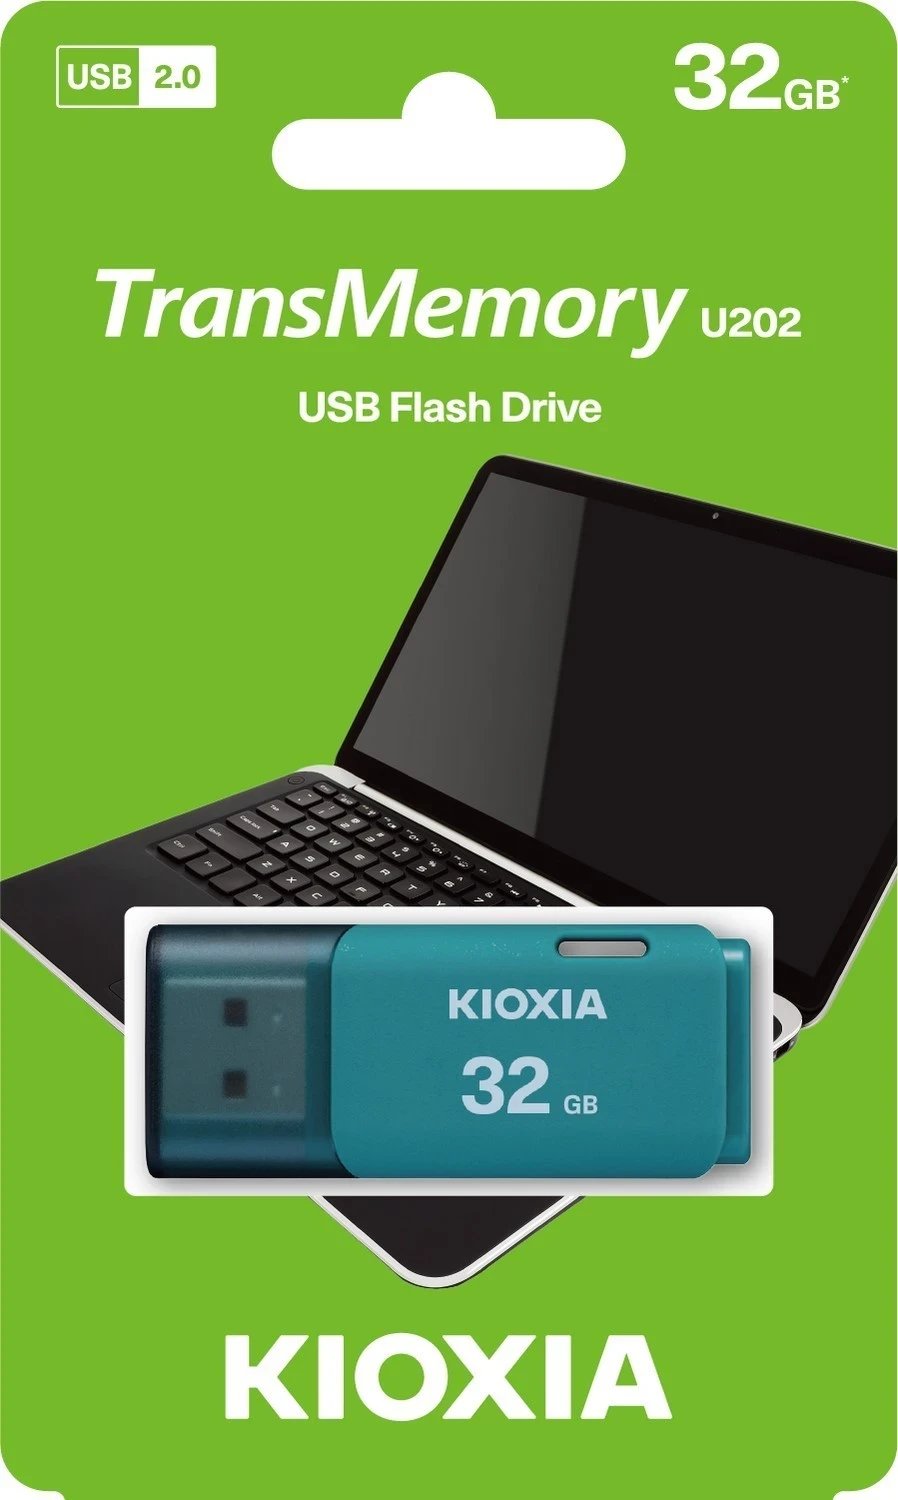 USB Kioxia U202 Hayabusa, USB 2.0, 32GB, e kaltër 